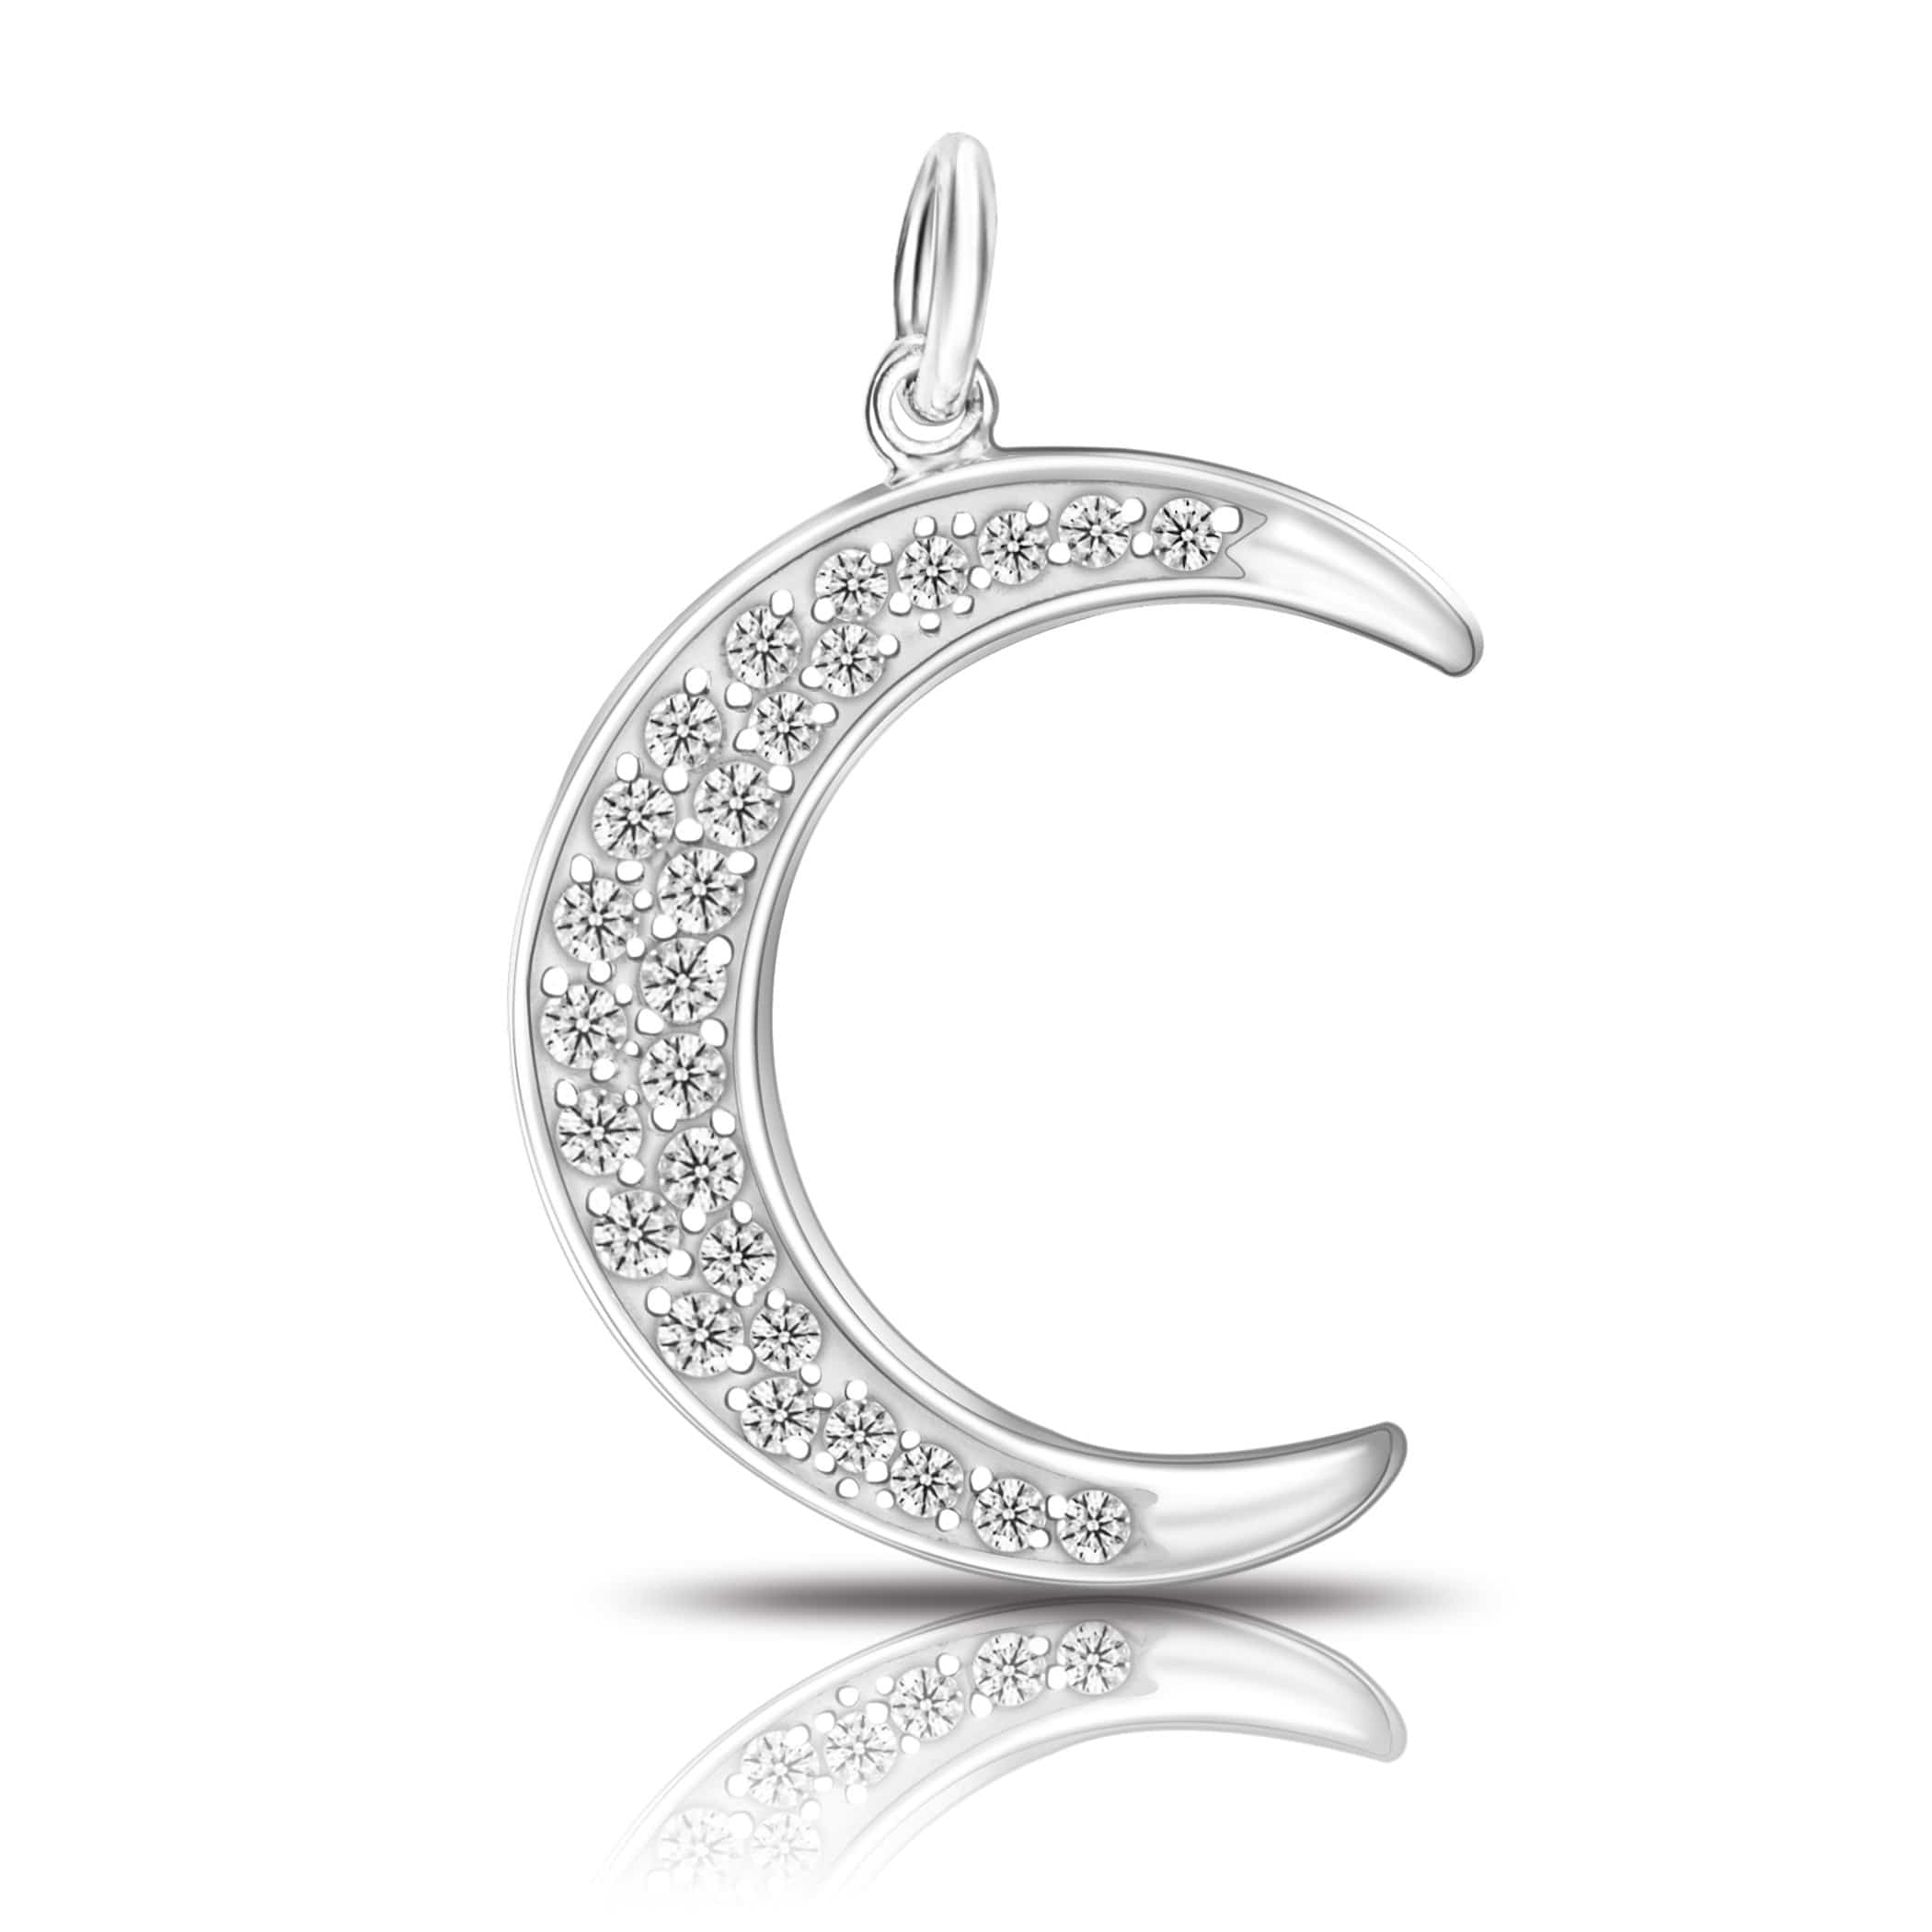 Crescent Moon Pendant Silver Pendant